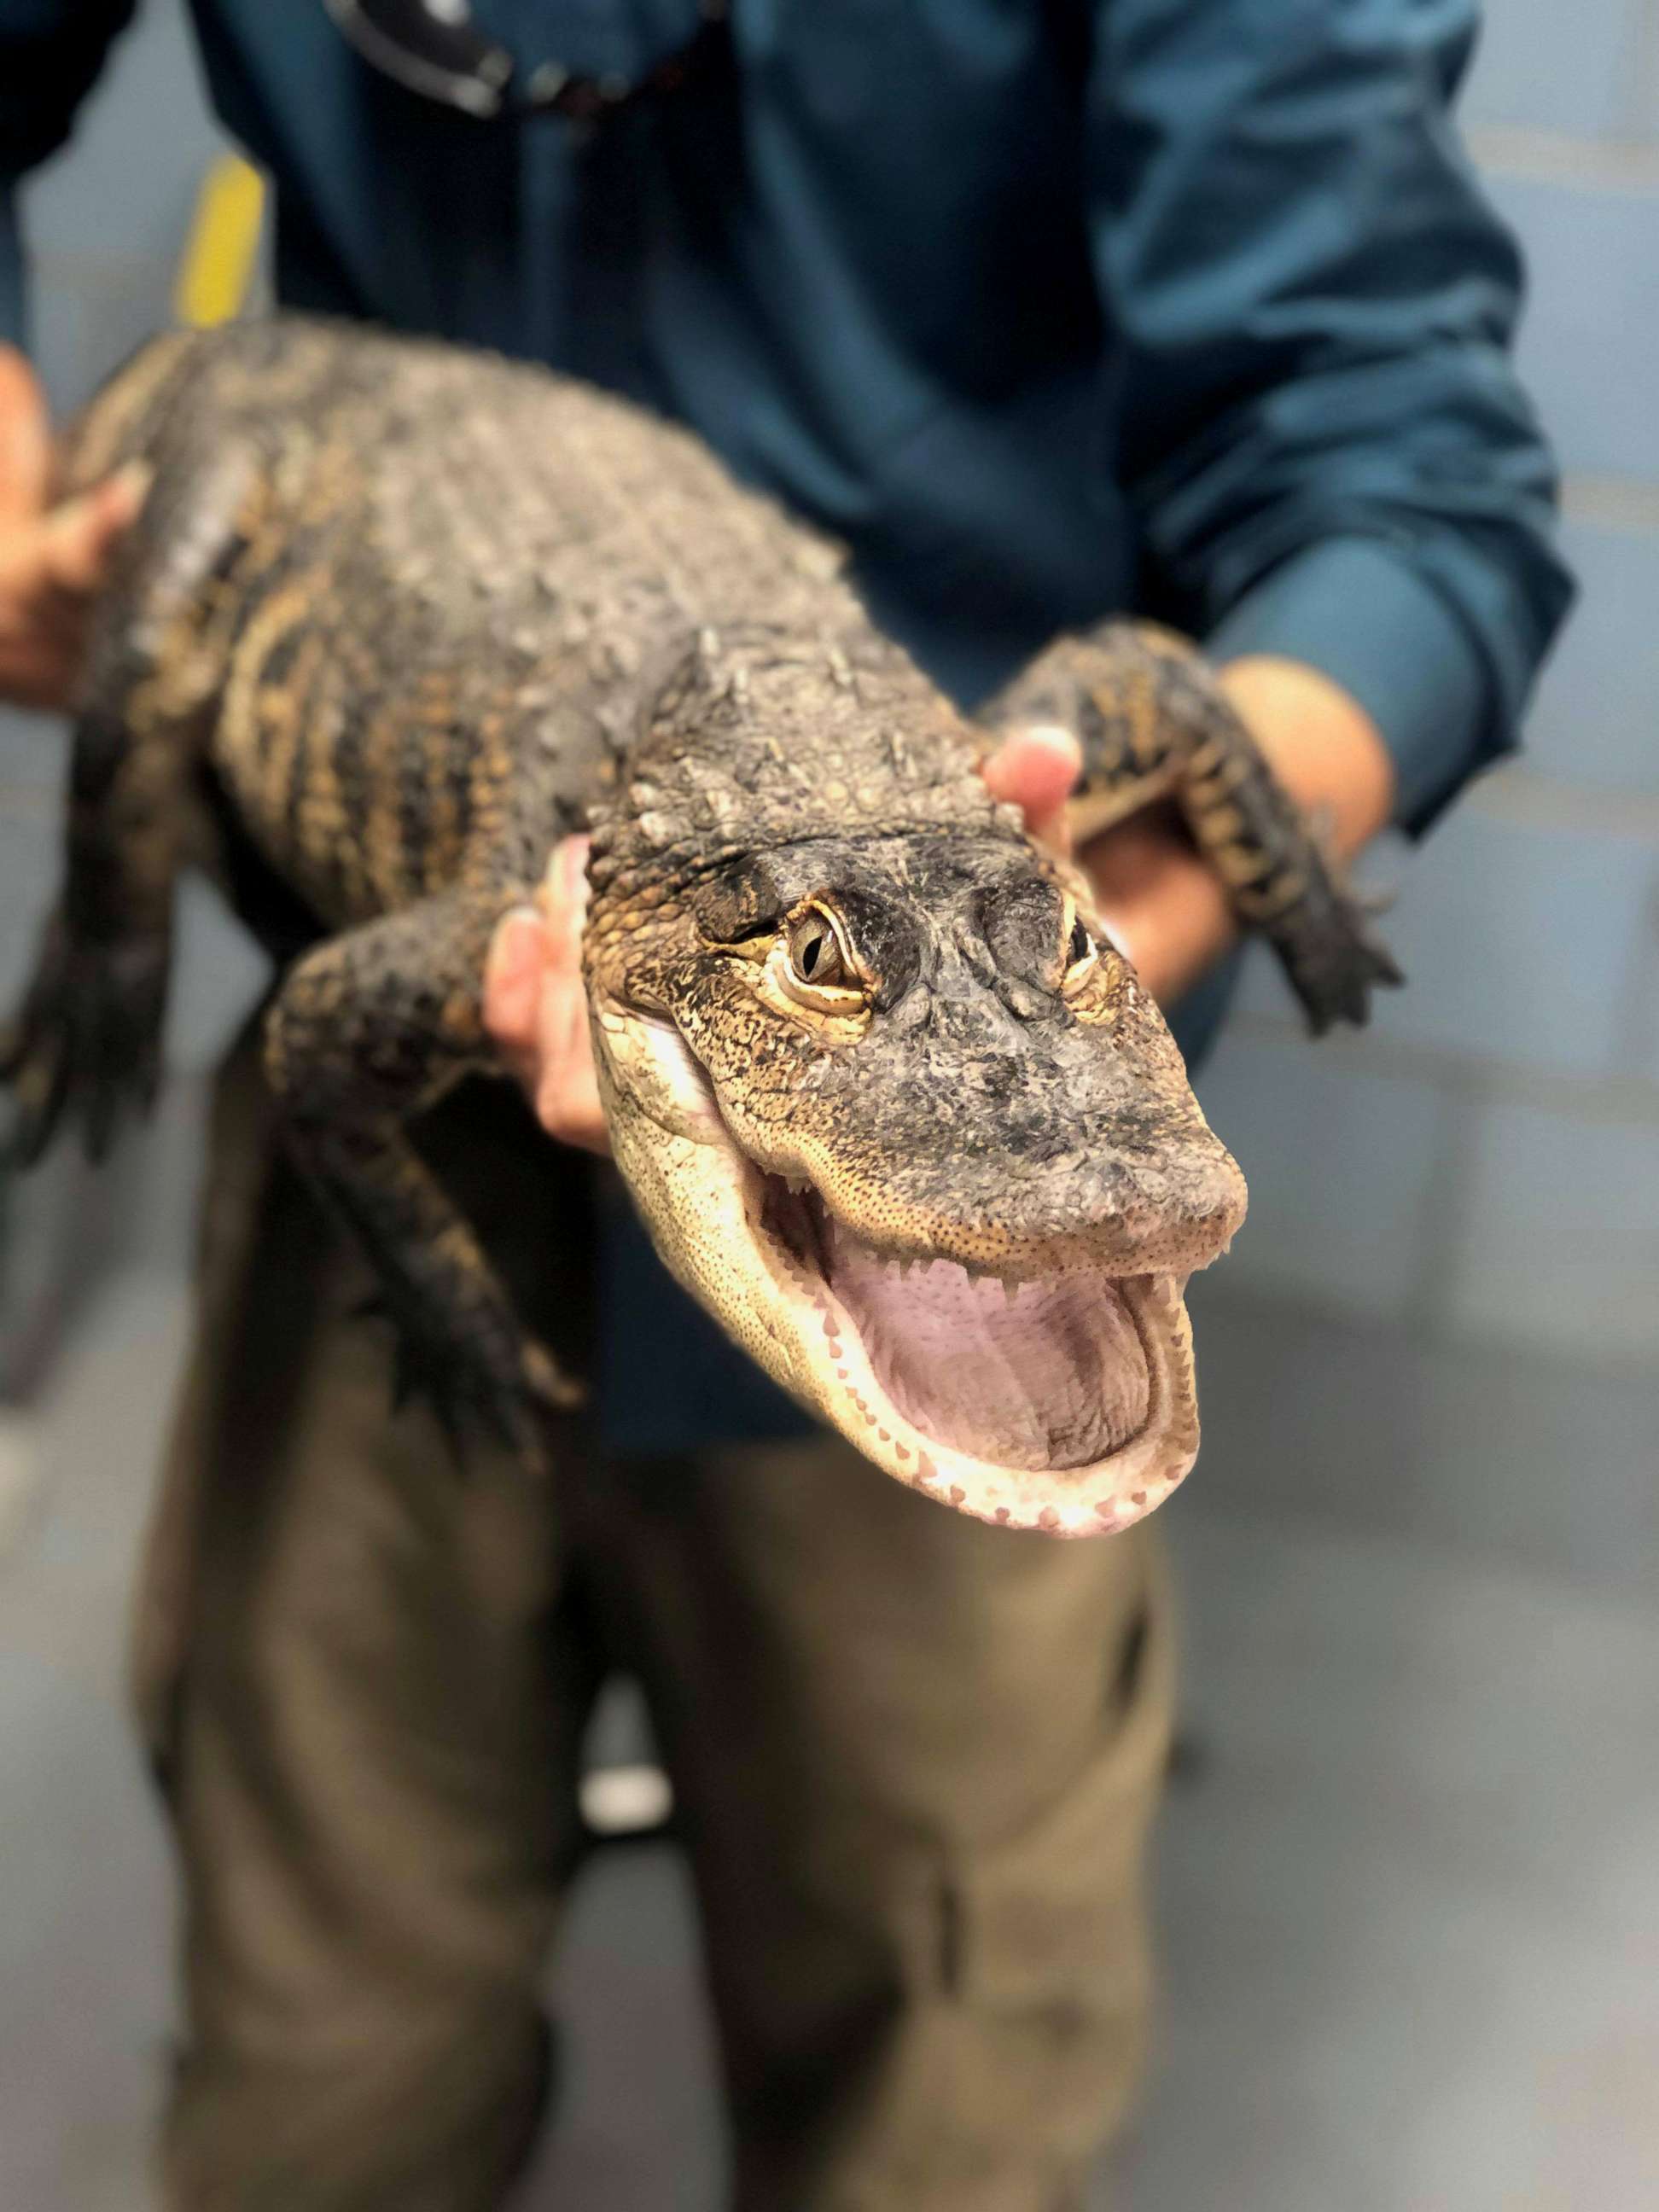 PHOTO: Alligator captured in Chicago on July 16, 2019.